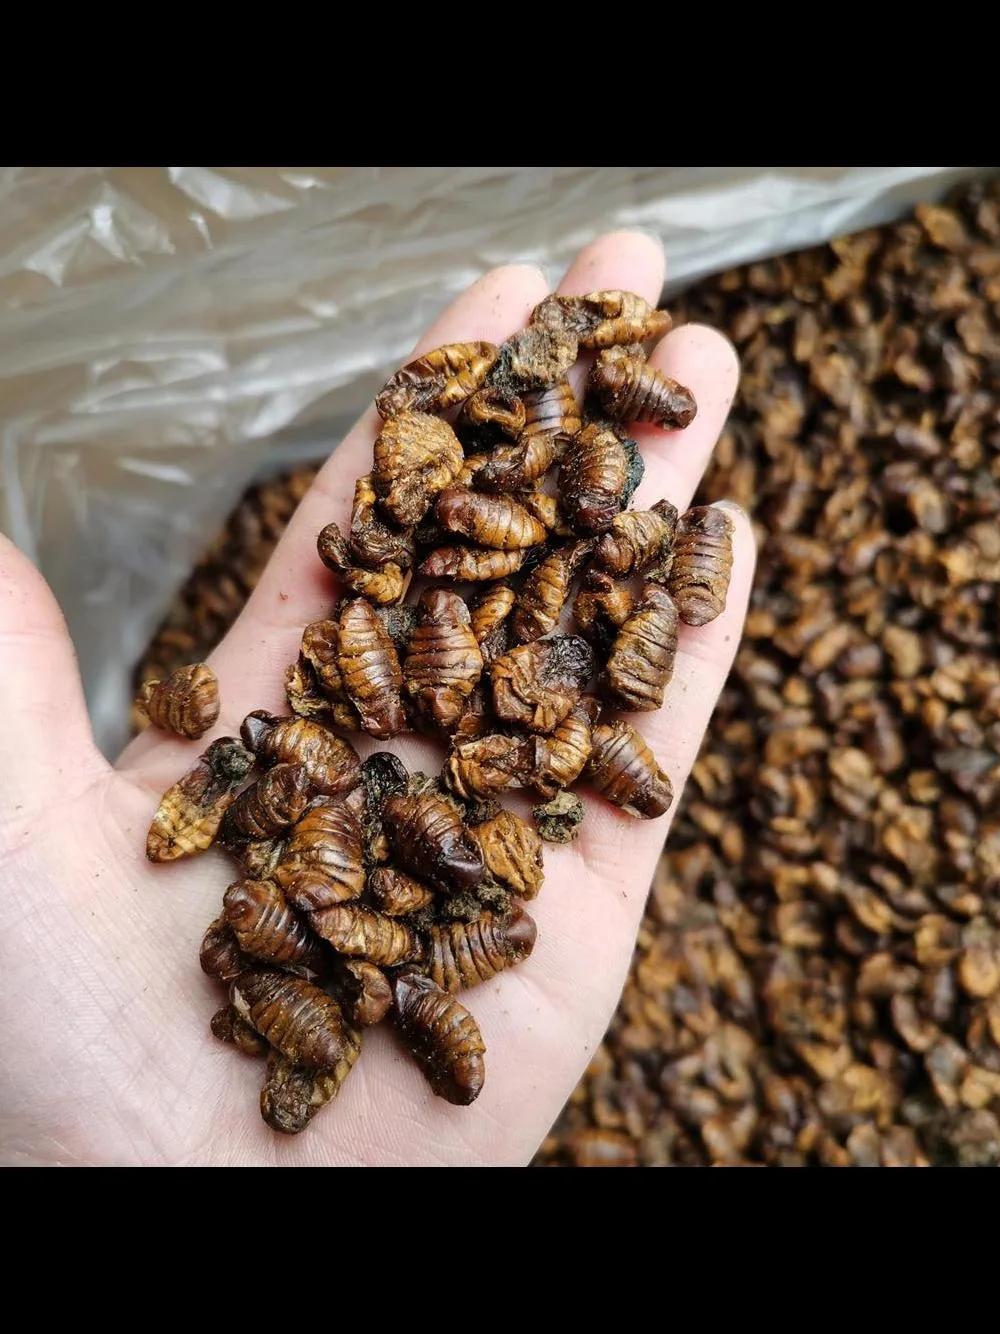 Silkworm Pupae for Pets Food